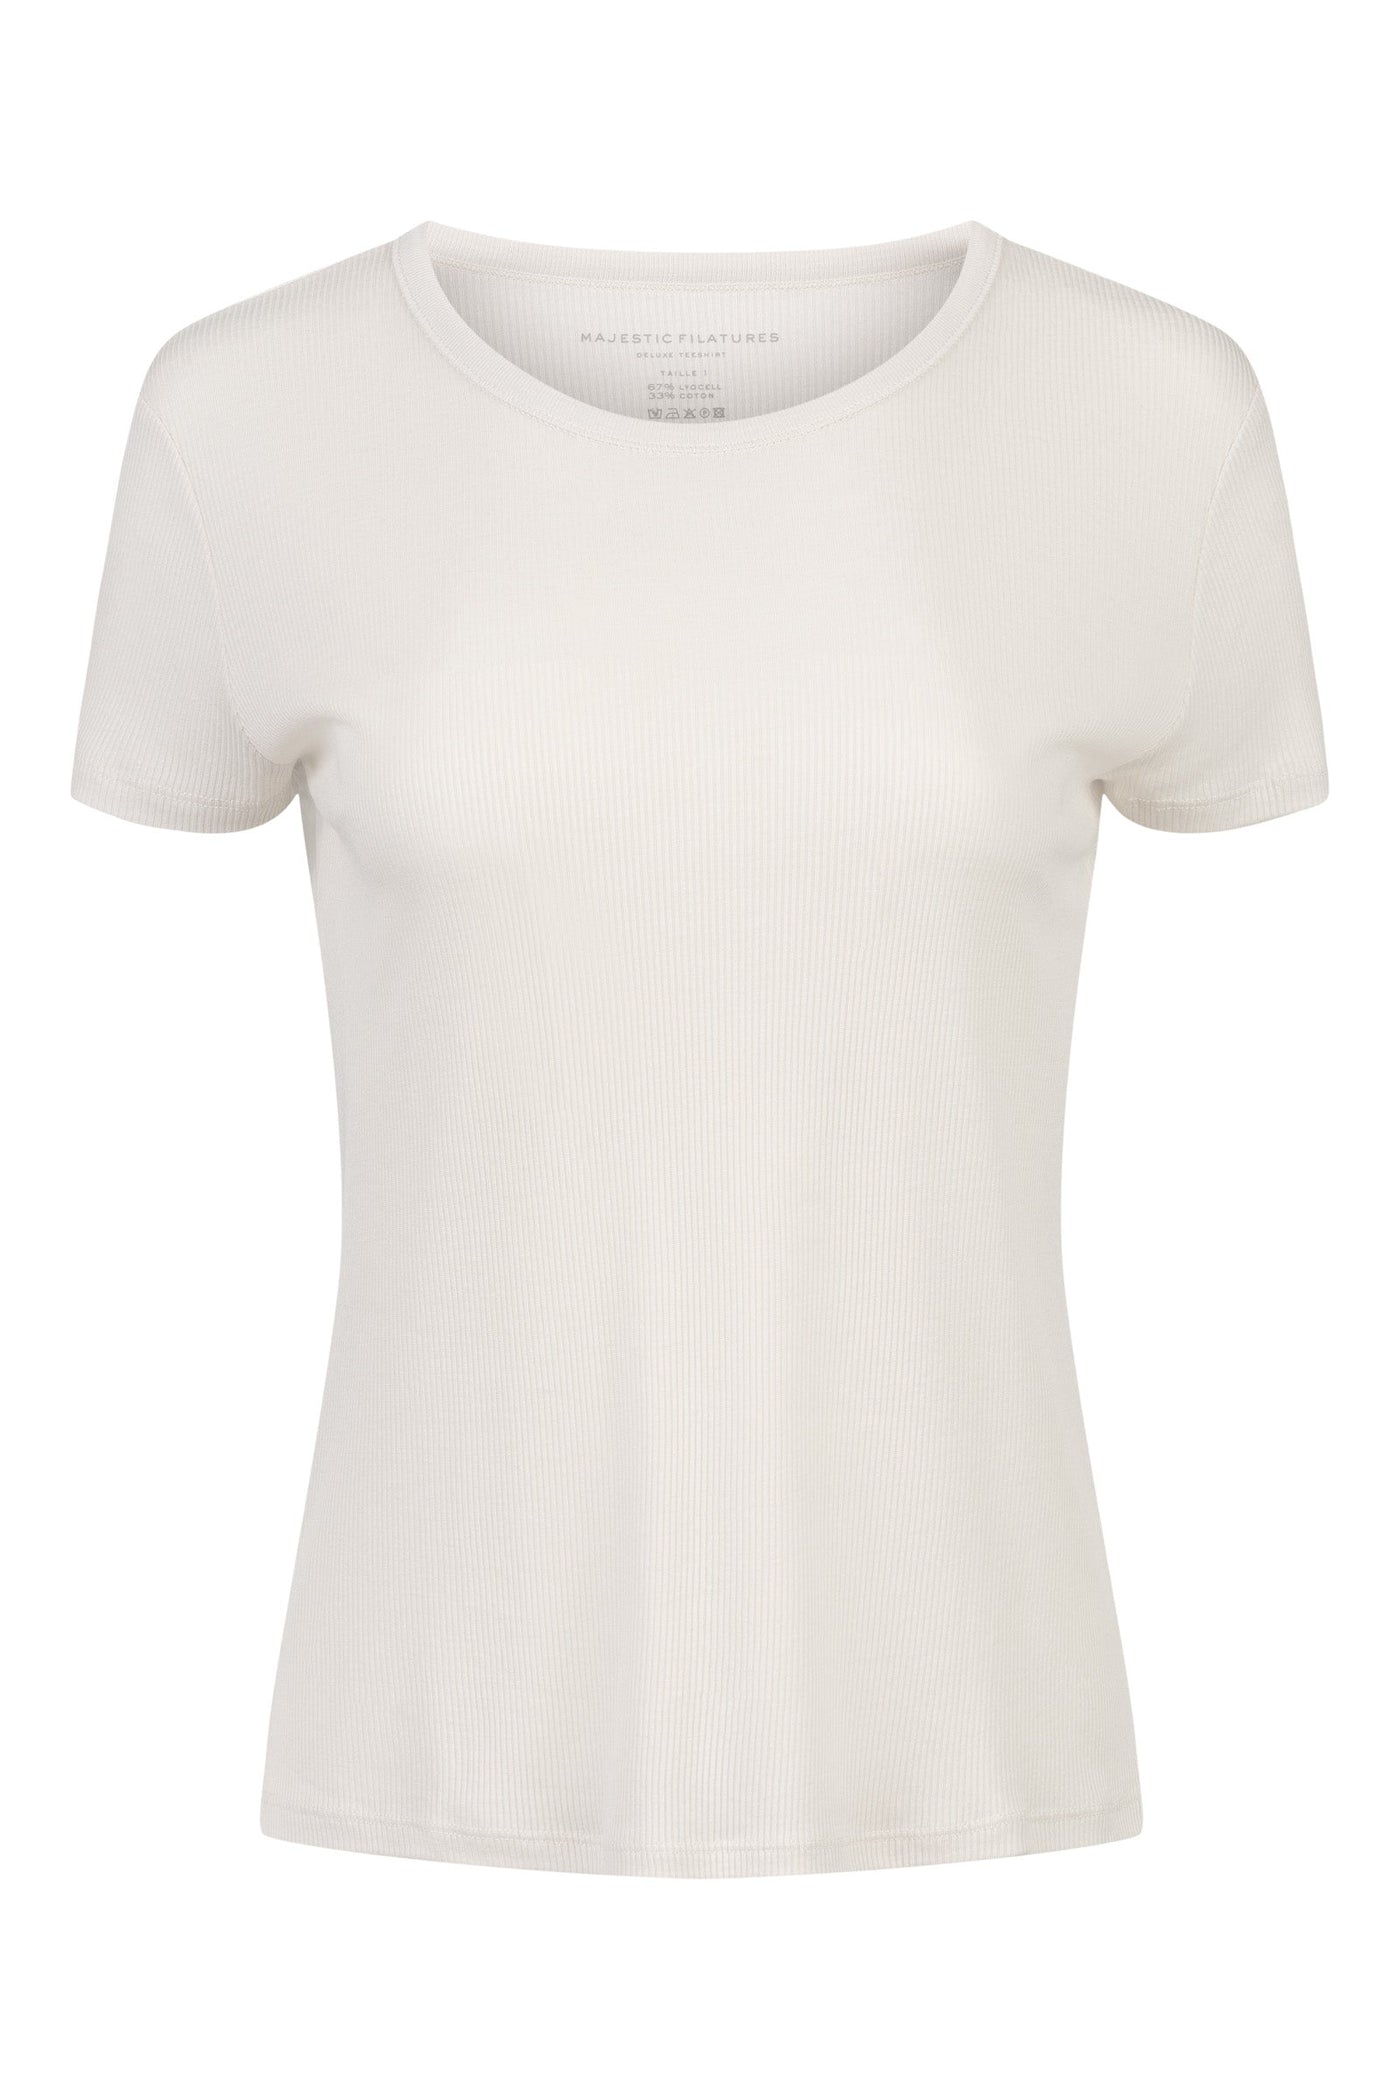 Lyocell Cotton Baby Rib Short Sleeve Crewneck T-Shirt - CREW S/S - Majestic Filatures North America